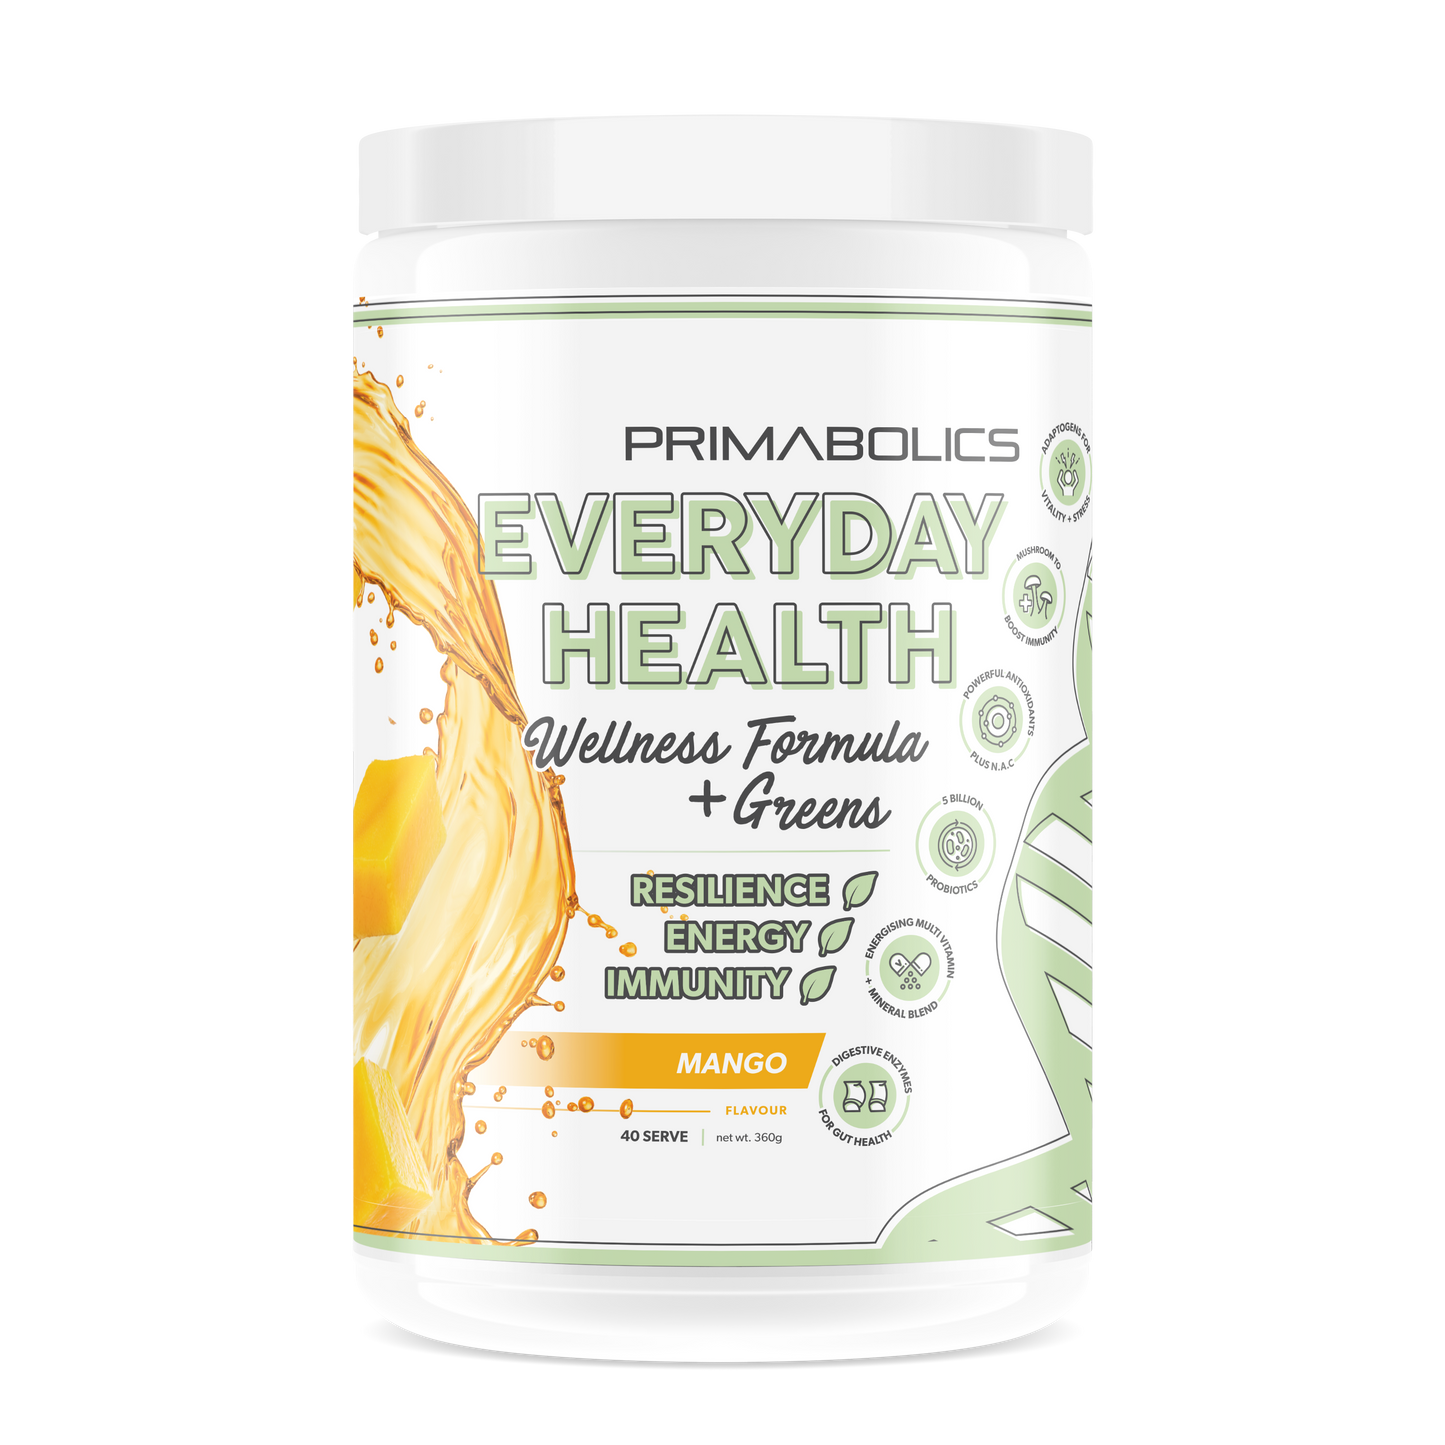 Everyday Health Wellness Formula - 40 SERVE